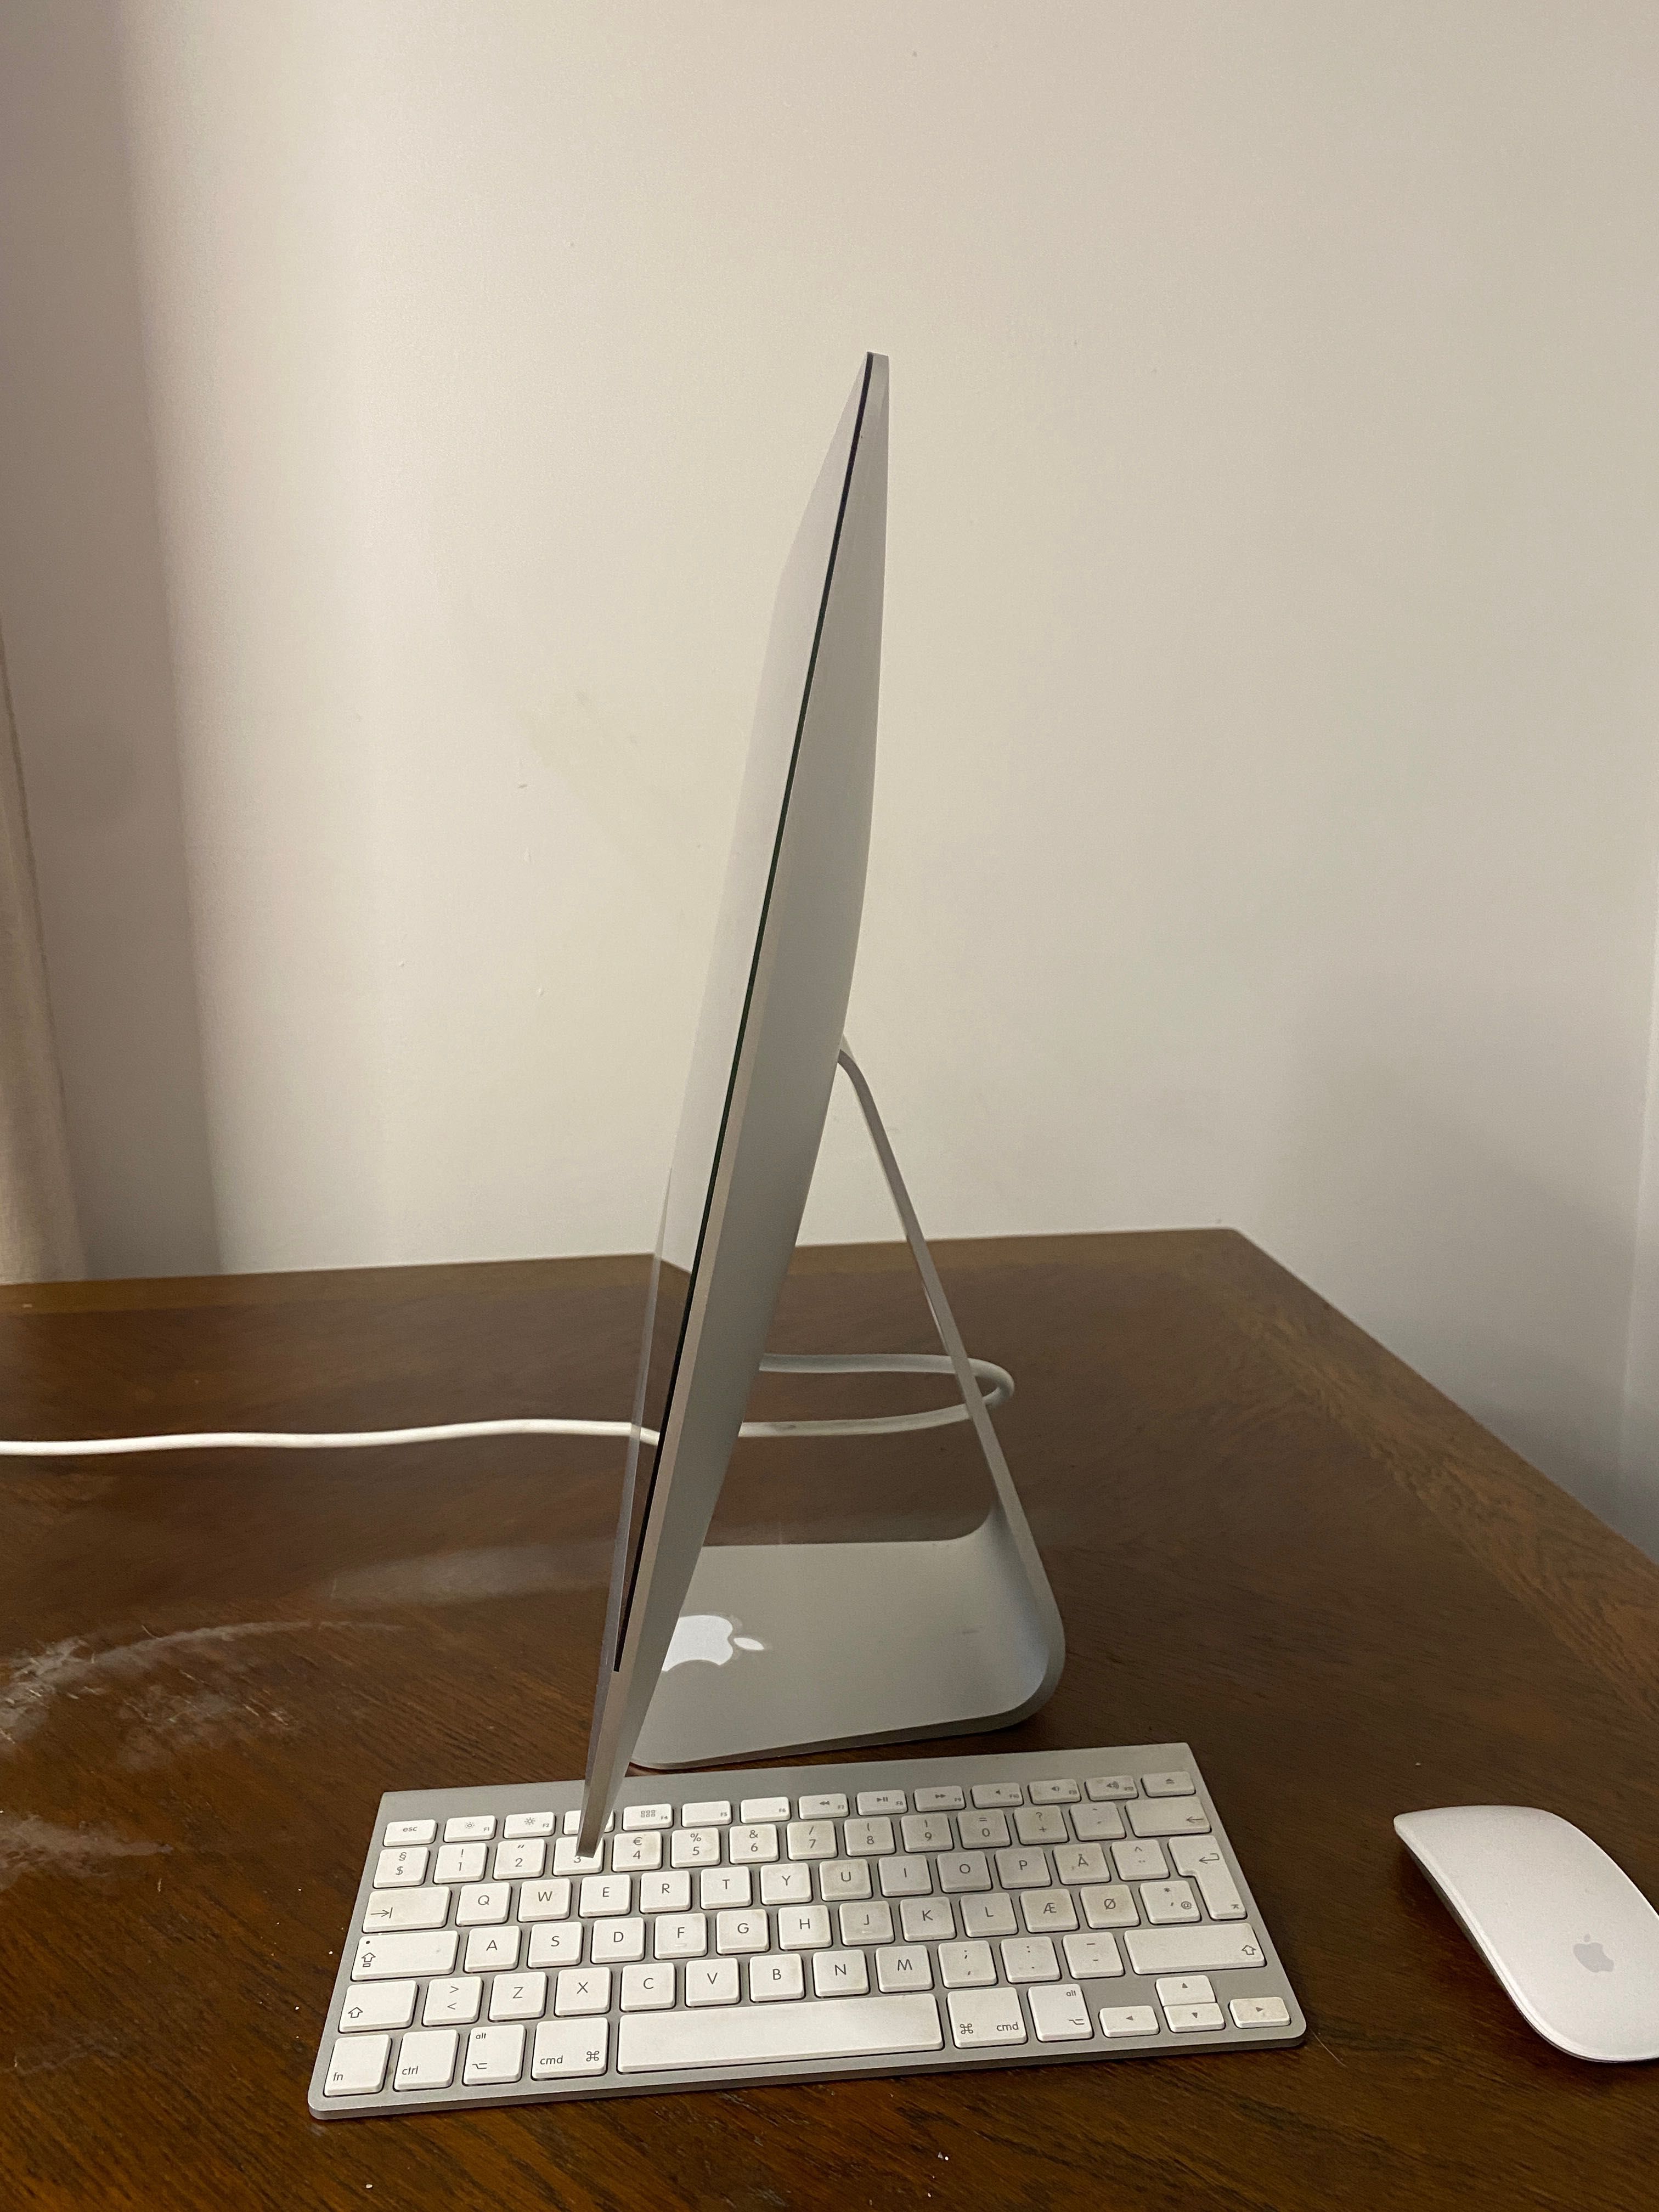 iMac 21,5 2014 r